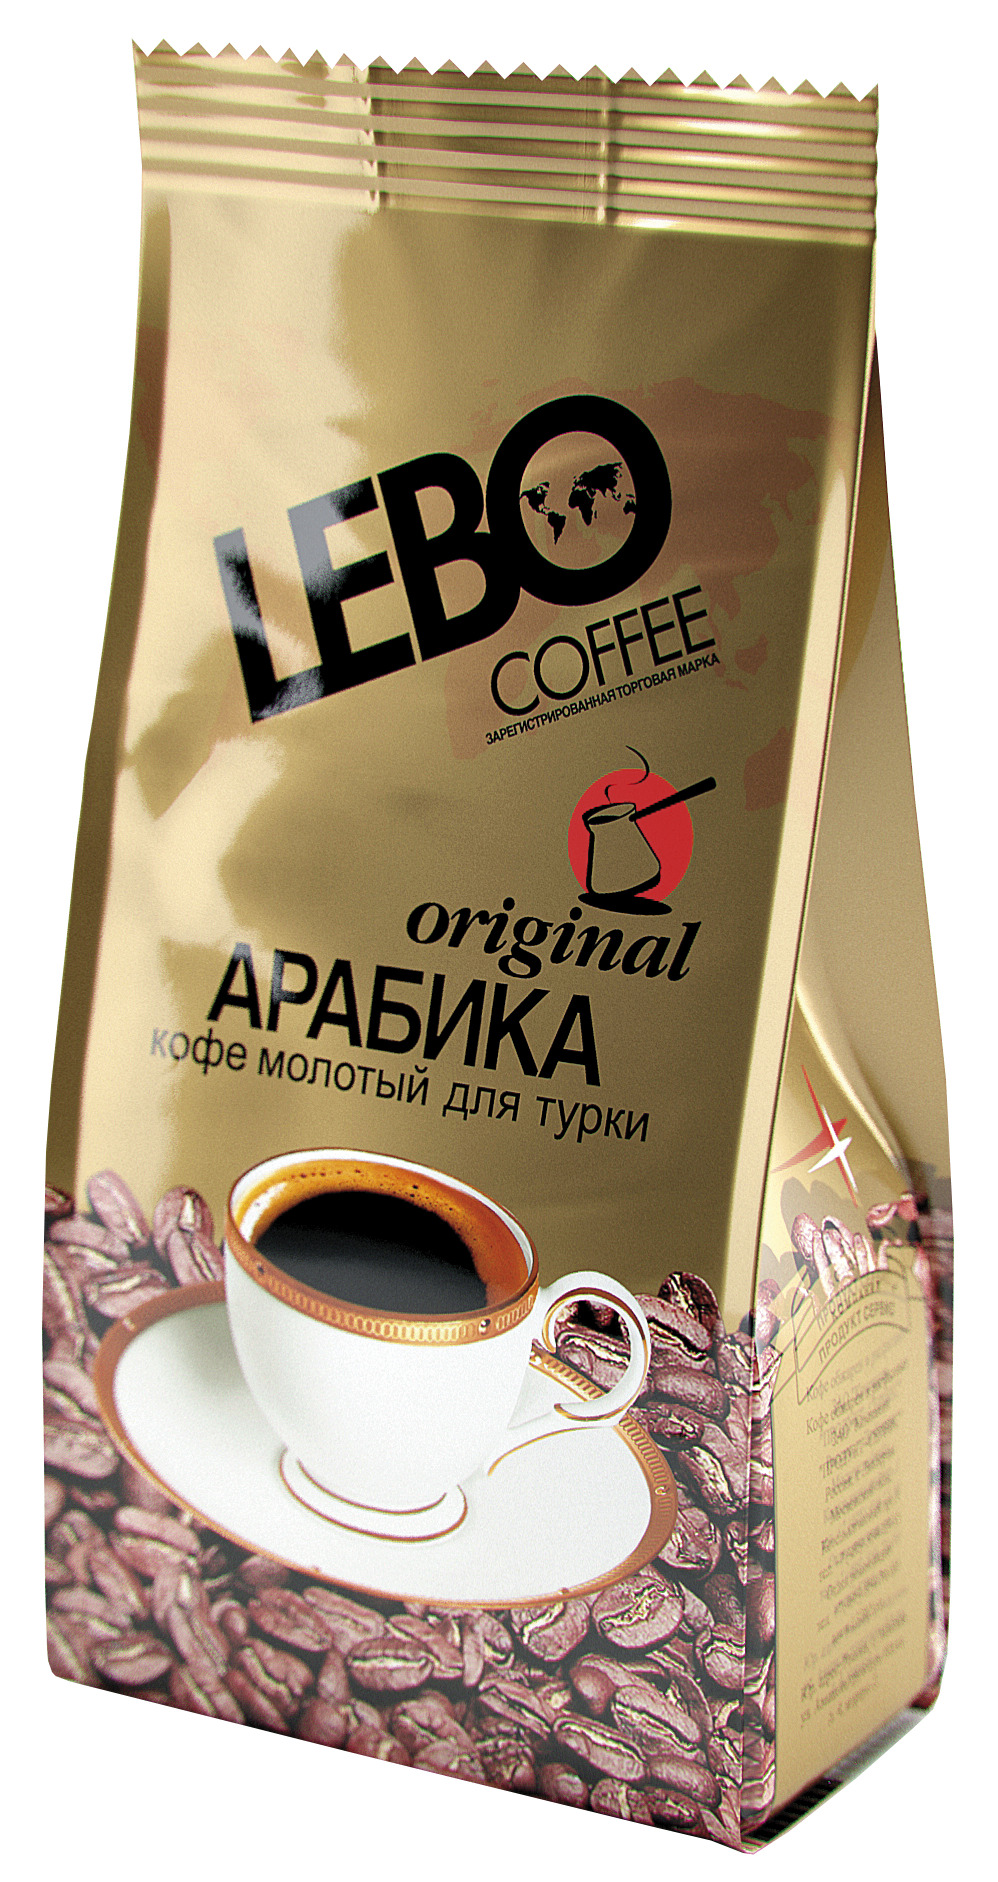 Лучшее кофе для турки отзывы. Кофе молотый Арабика принц Лебо. Кофе принц Лебо Арабика зерно. Кофе Арабика принц Лебо мол 100г. Кофе принц Лебо турка.